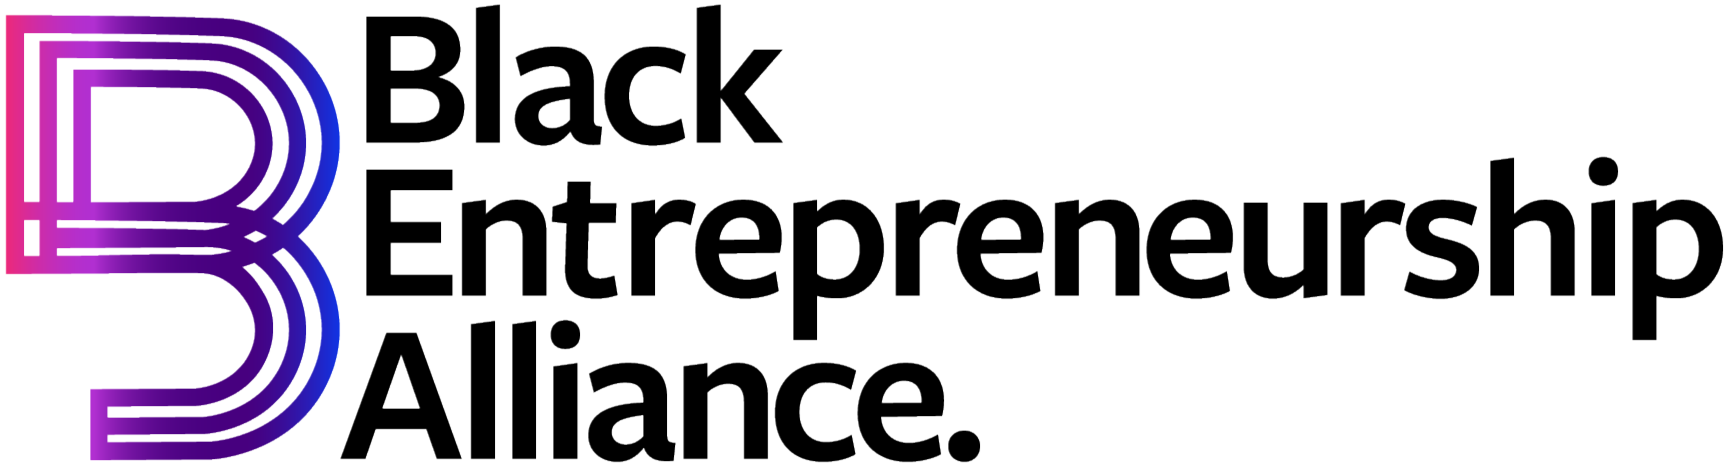 Black Entrepreneurship Alliance (BEA)